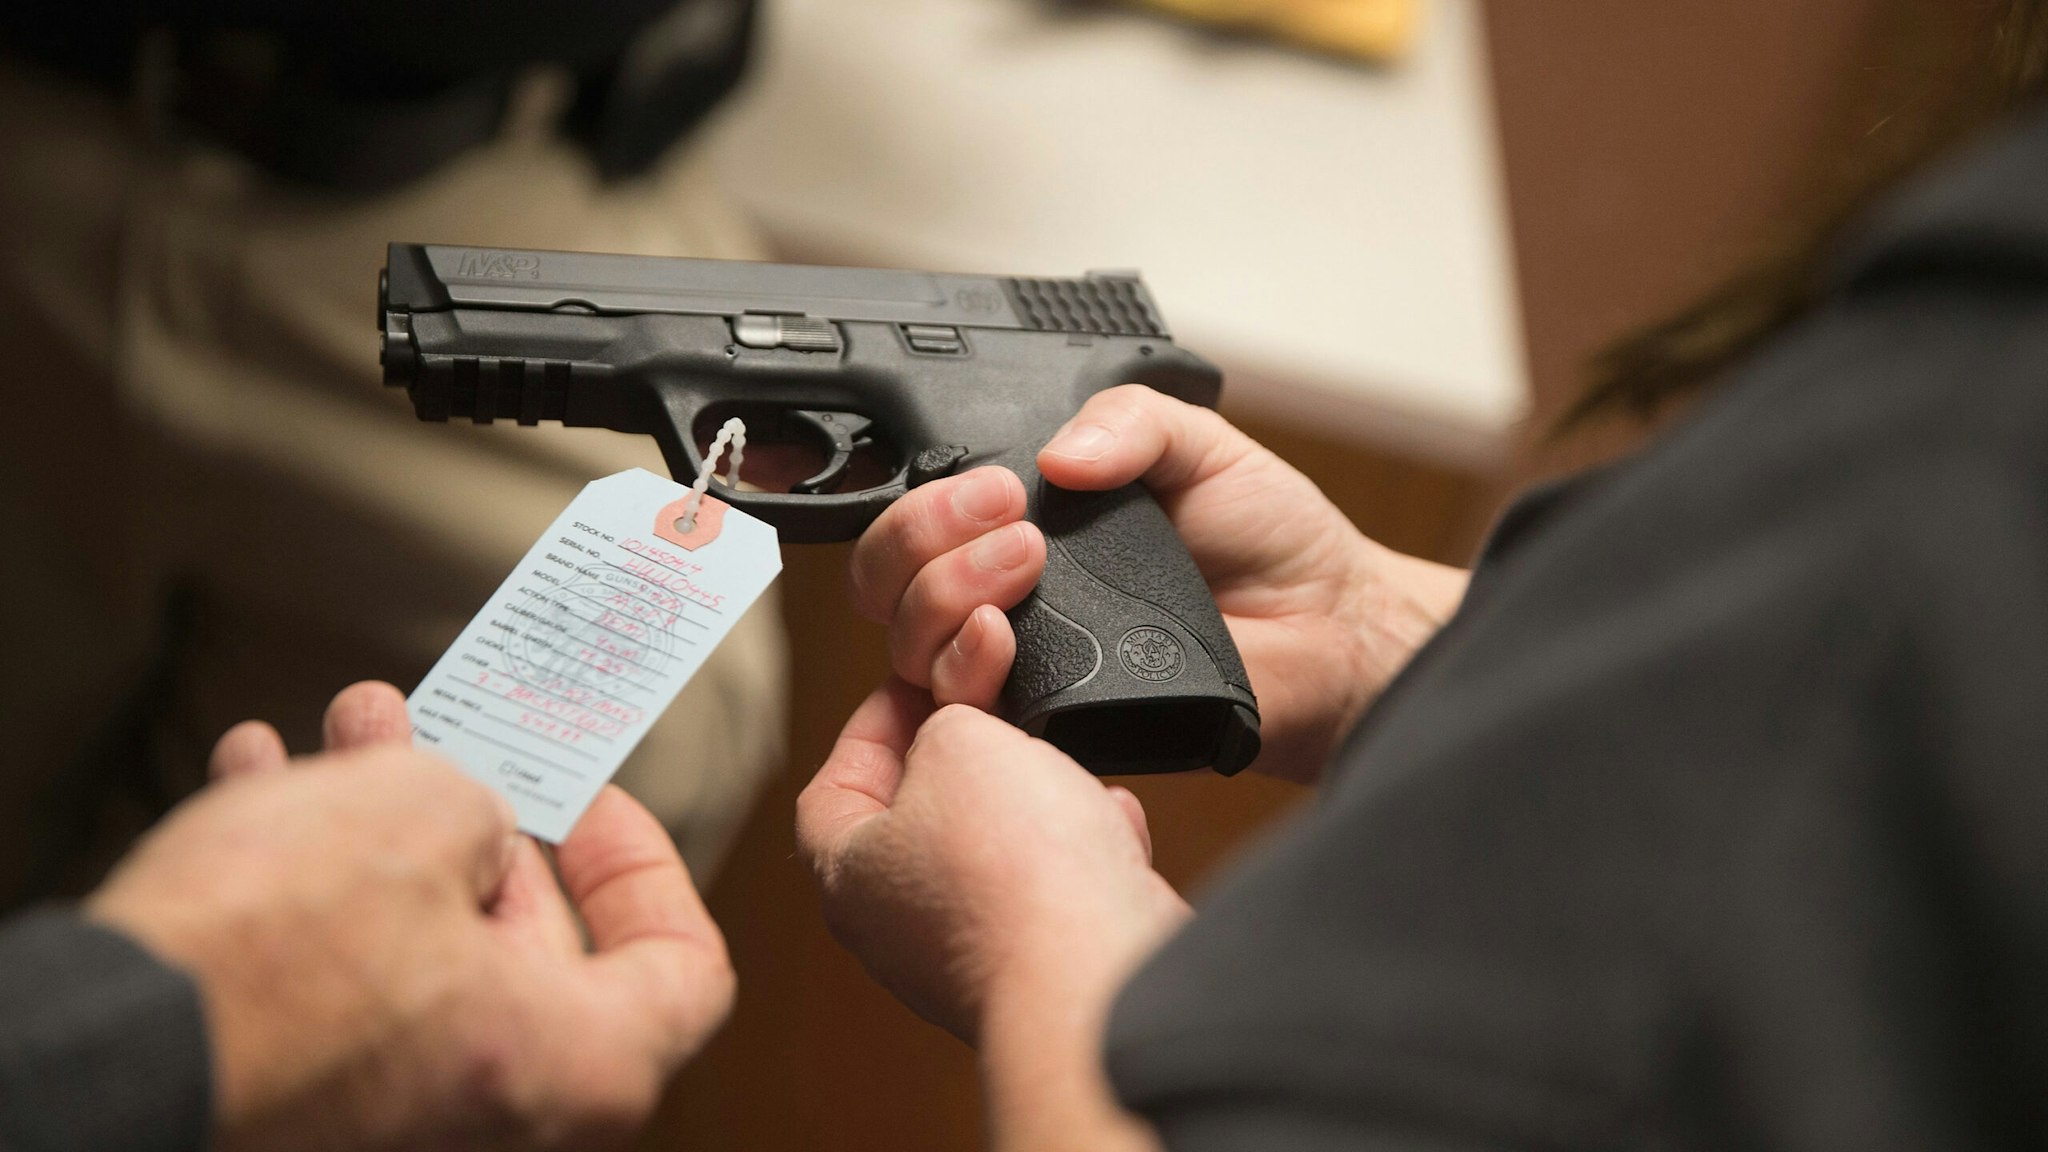 Customers shop for a handgun at Metro Shooting Supplies on November 12, 2014 in Bridgeton, Missouri.